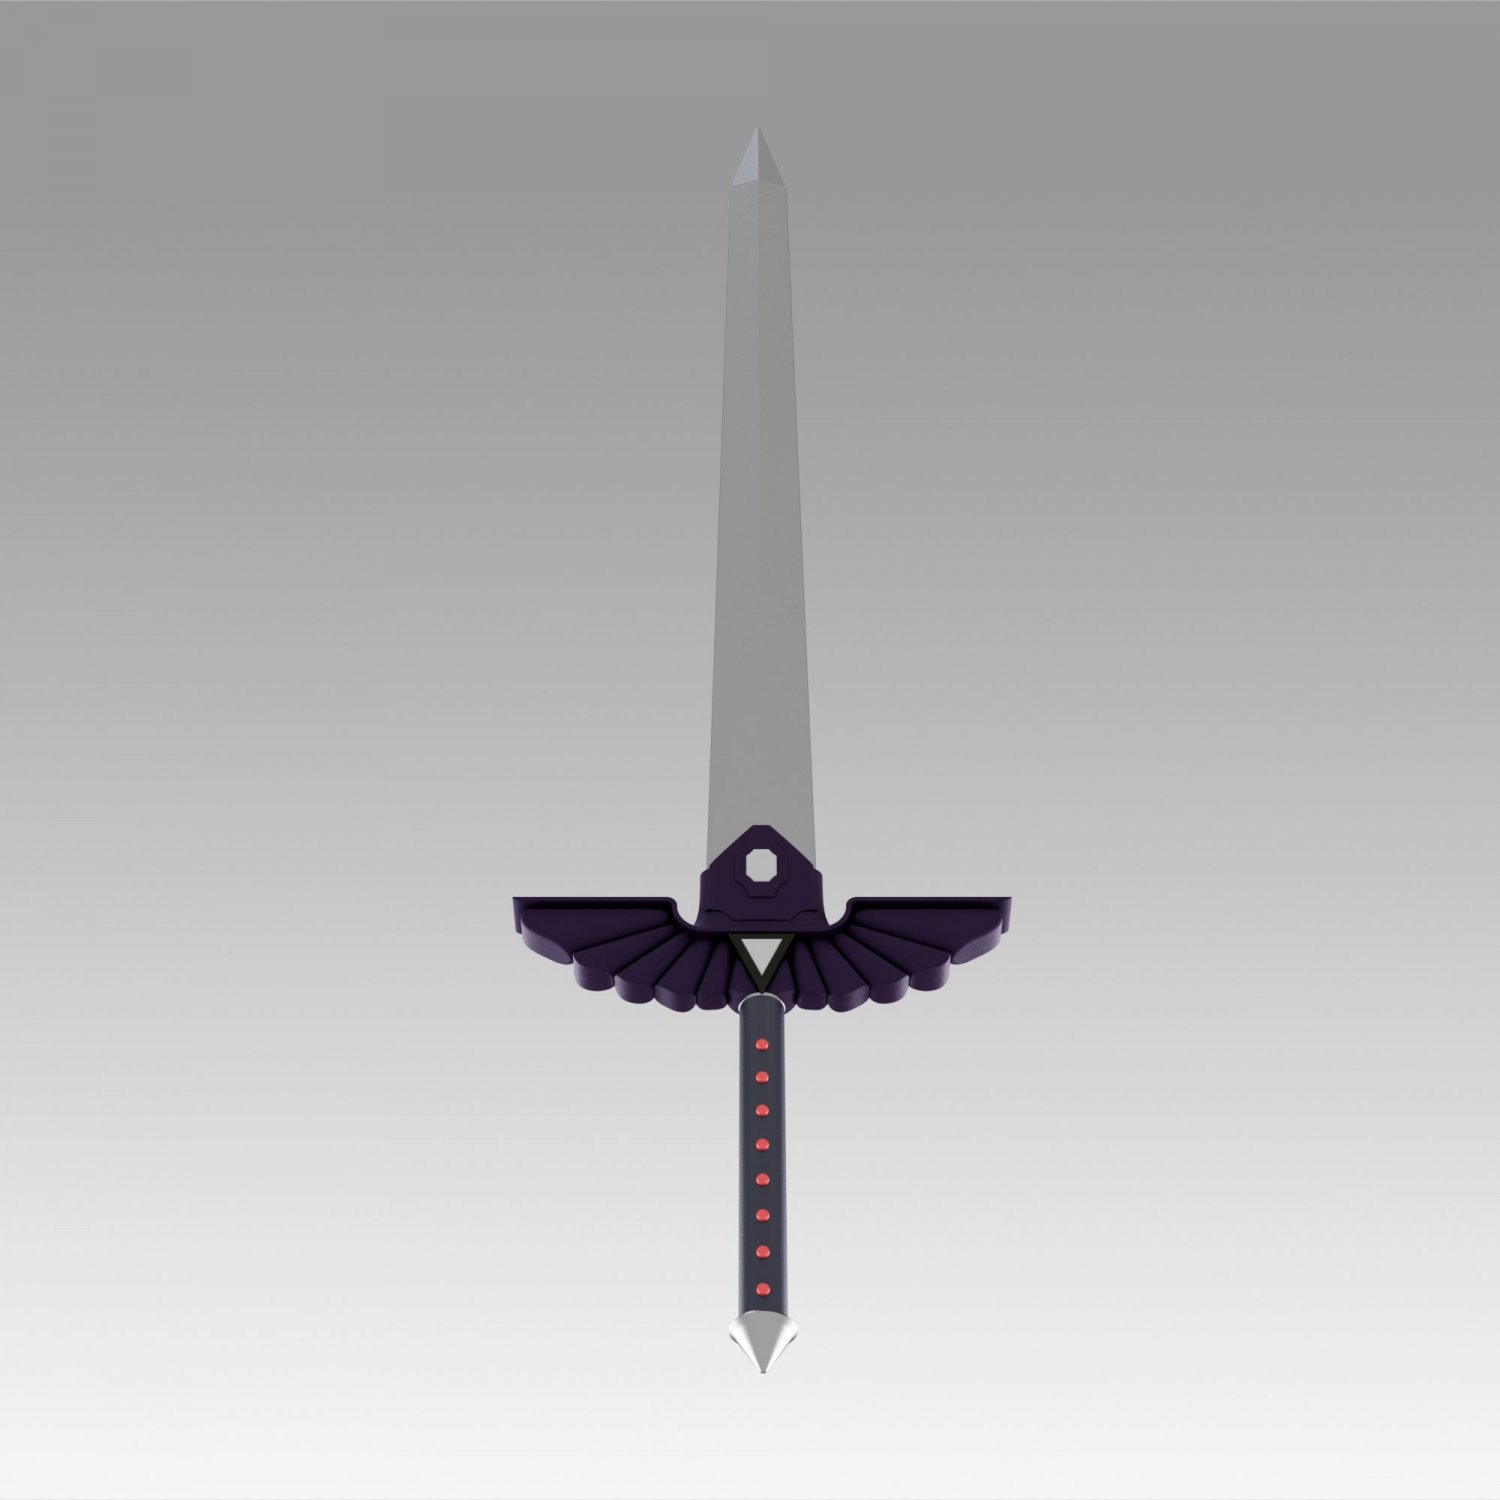 Hades Cosplay - Stygian Sword - 3D printed cosplay prop - Self assemble kit